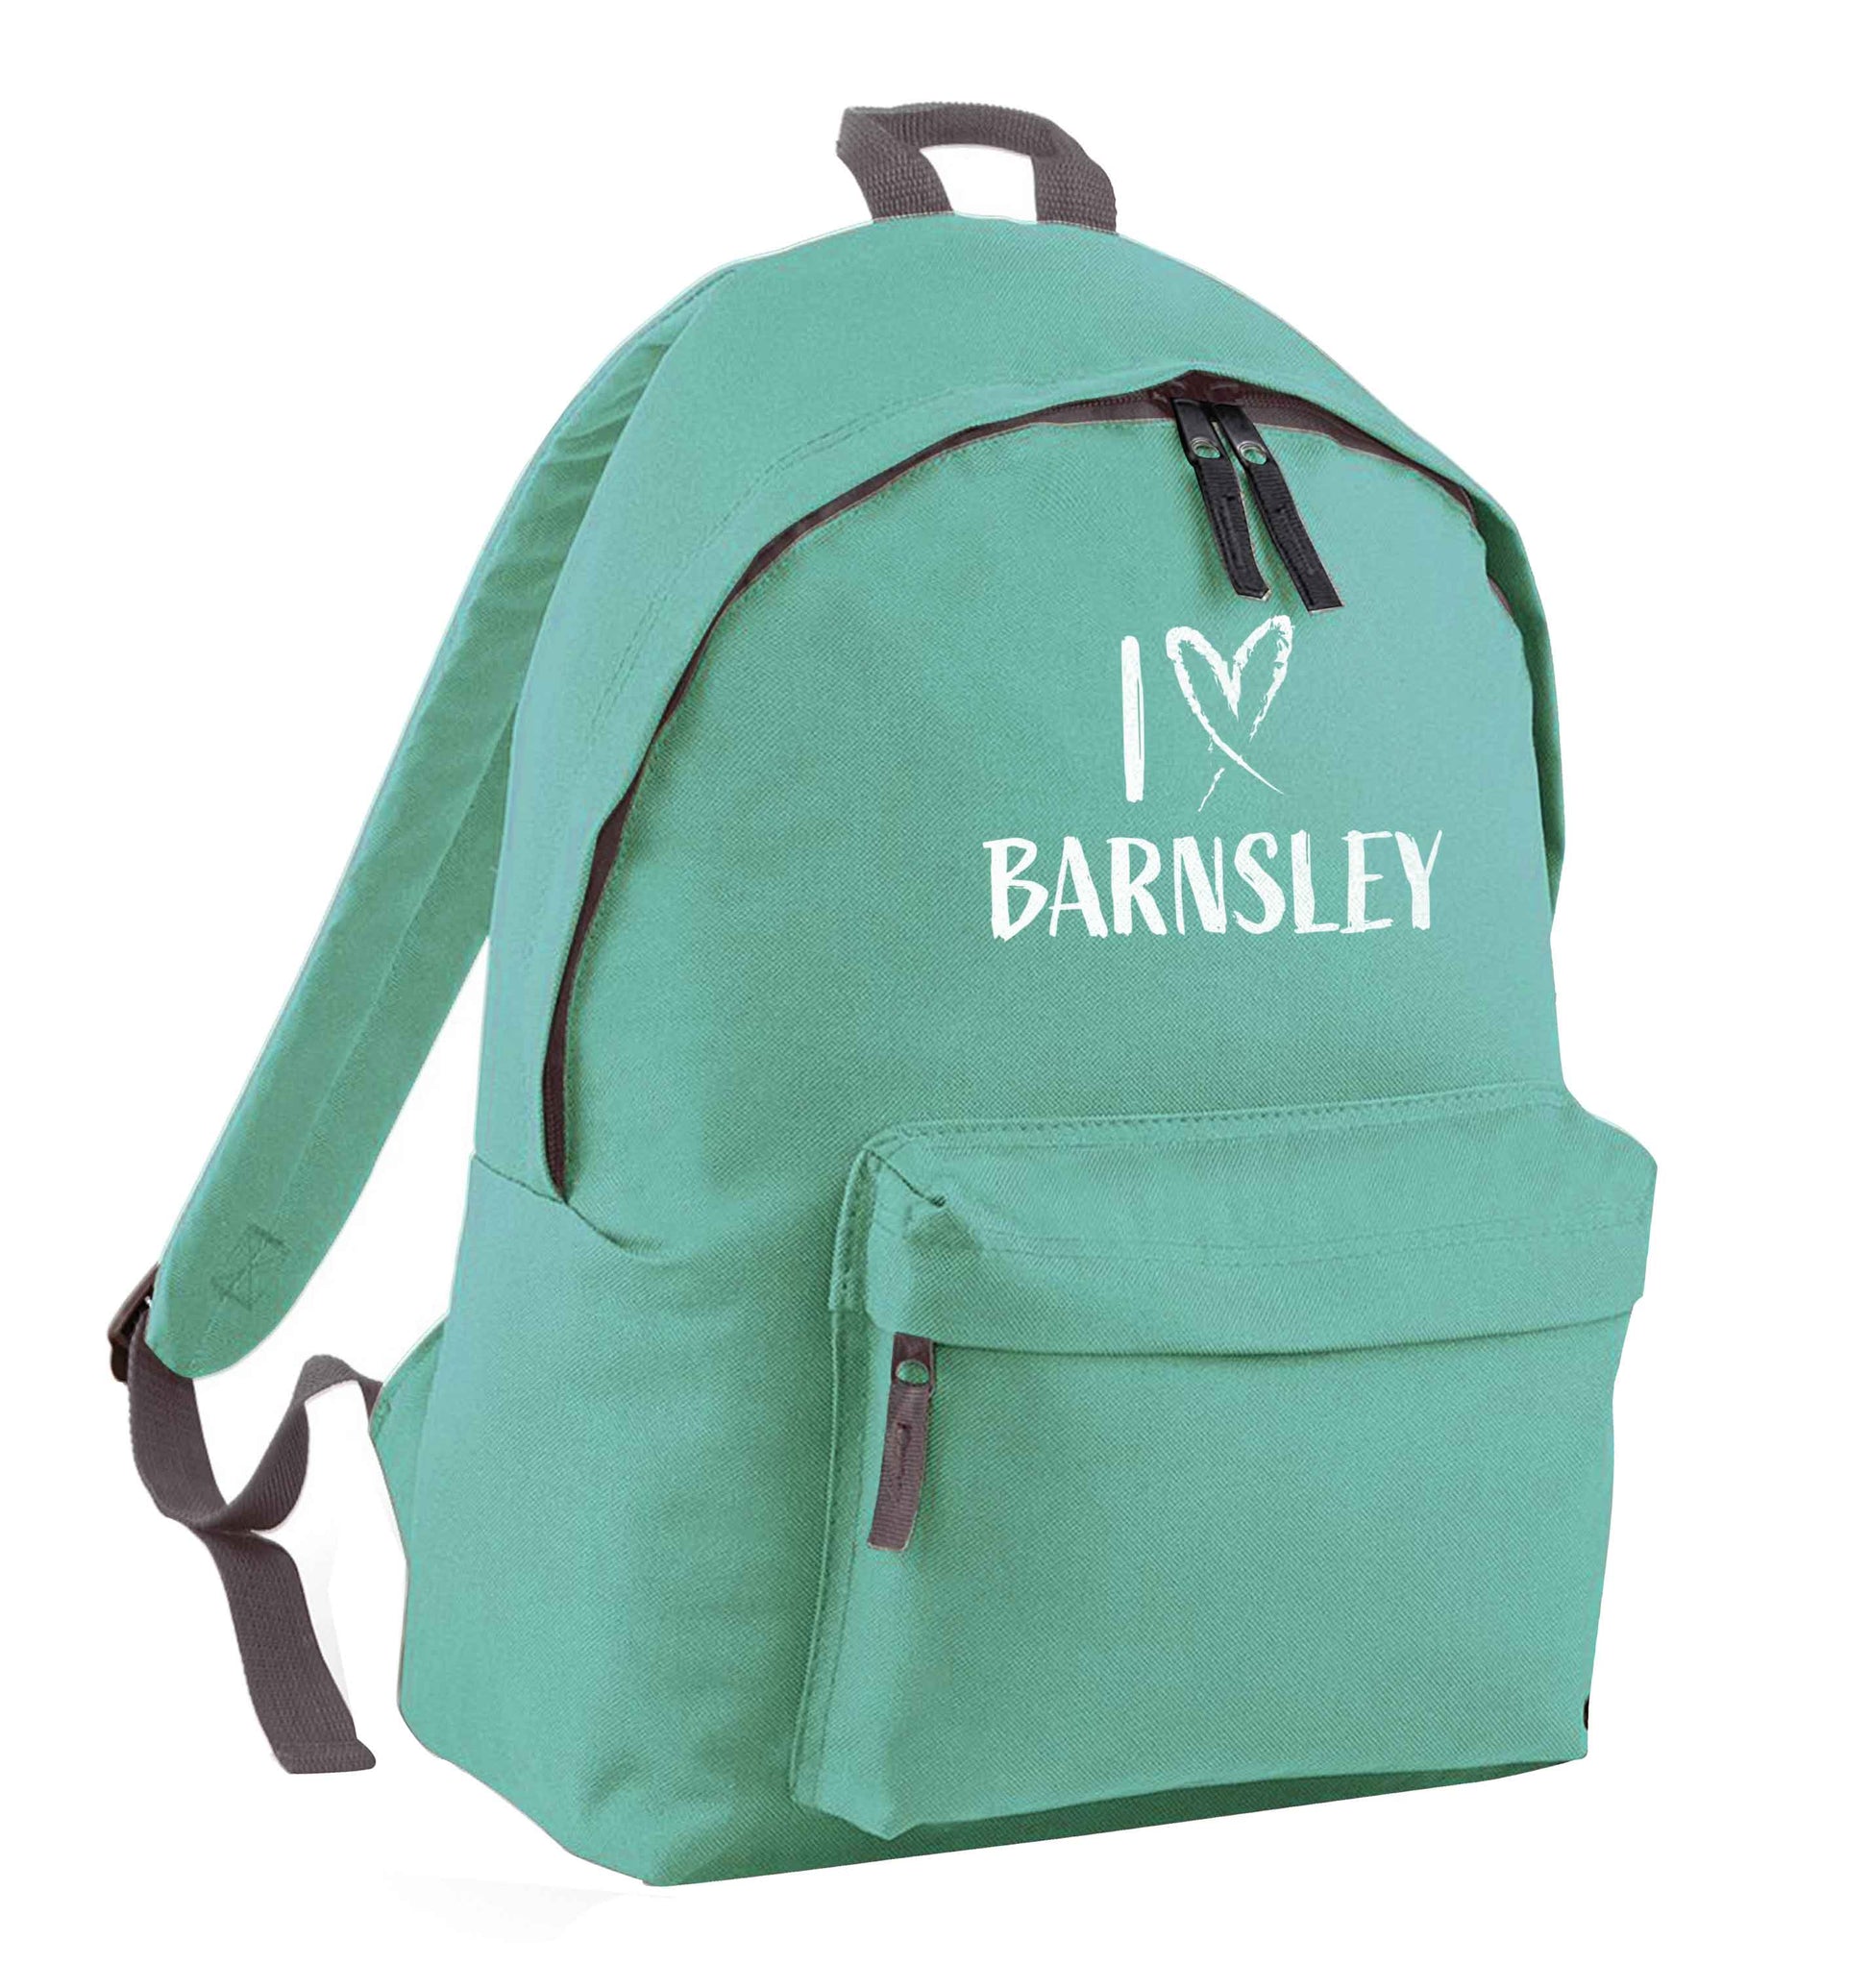 I love Barnsley mint adults backpack